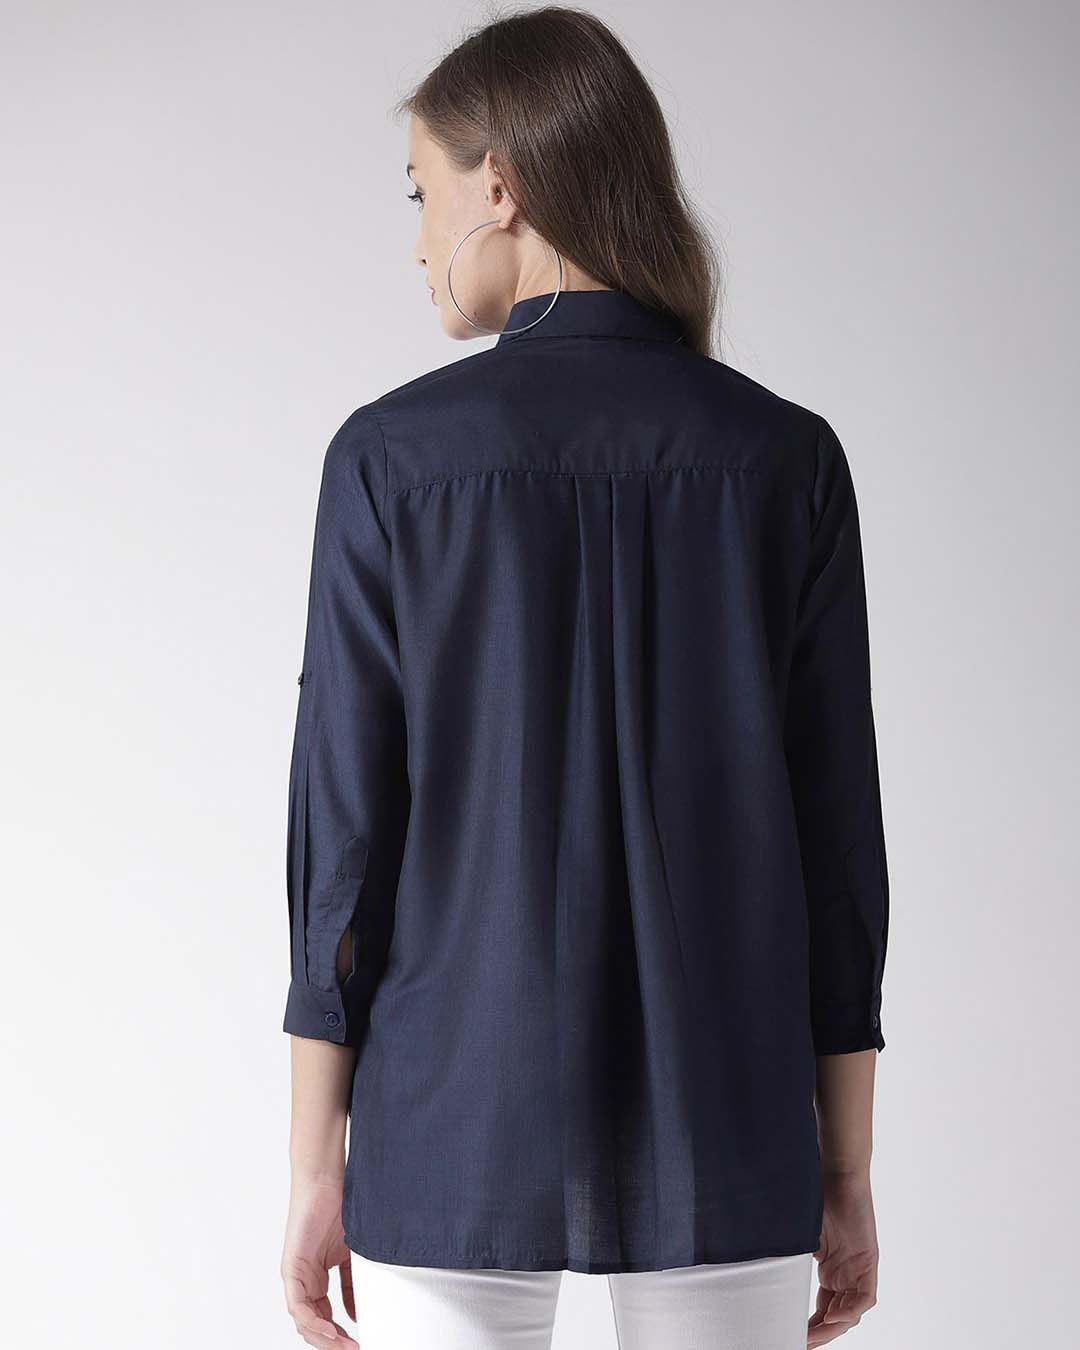 Shop Women's Navy Blue Classic Fit Solid Casual Shirt-Design